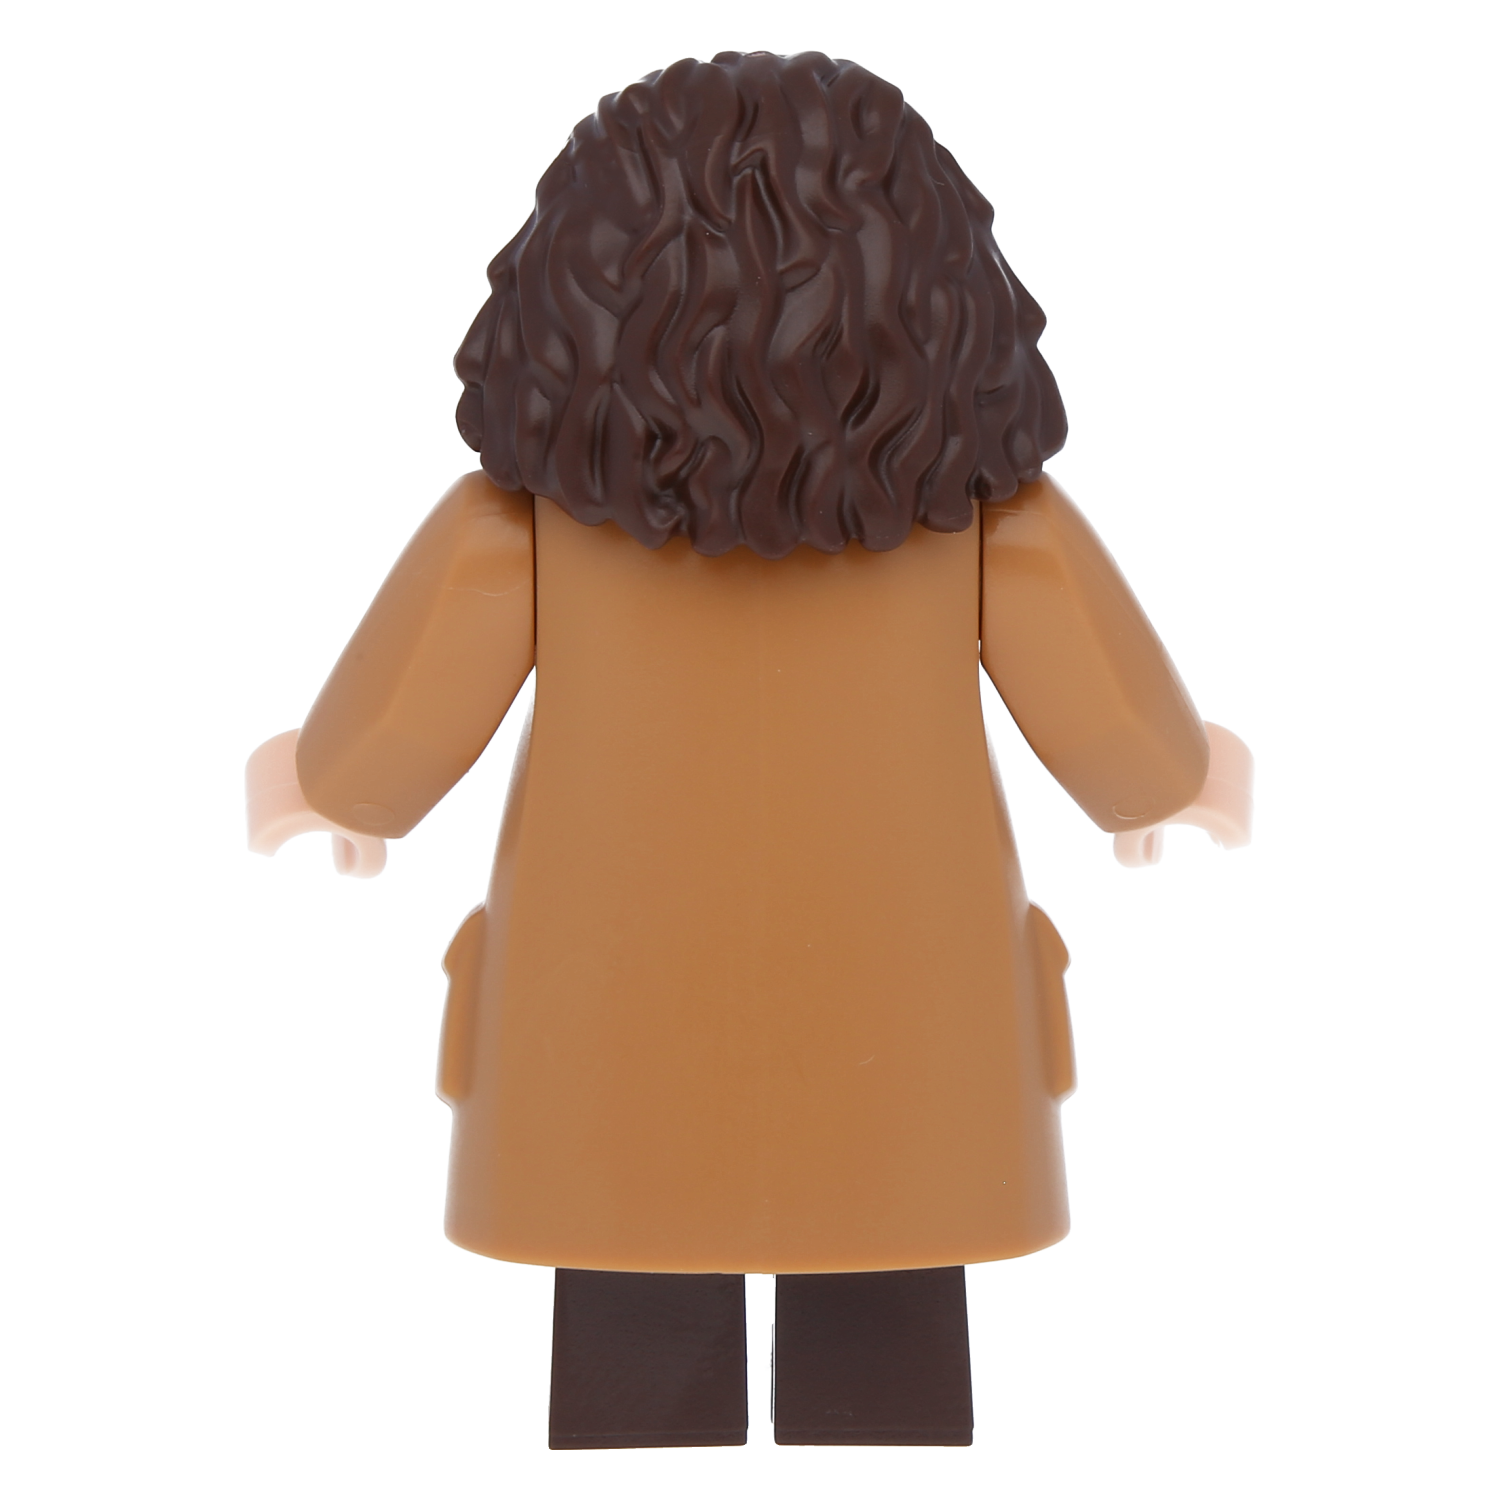 LEGO Harry Potter Minifigur - Rubeus Hagrid mit nougatfarbenen Mantel